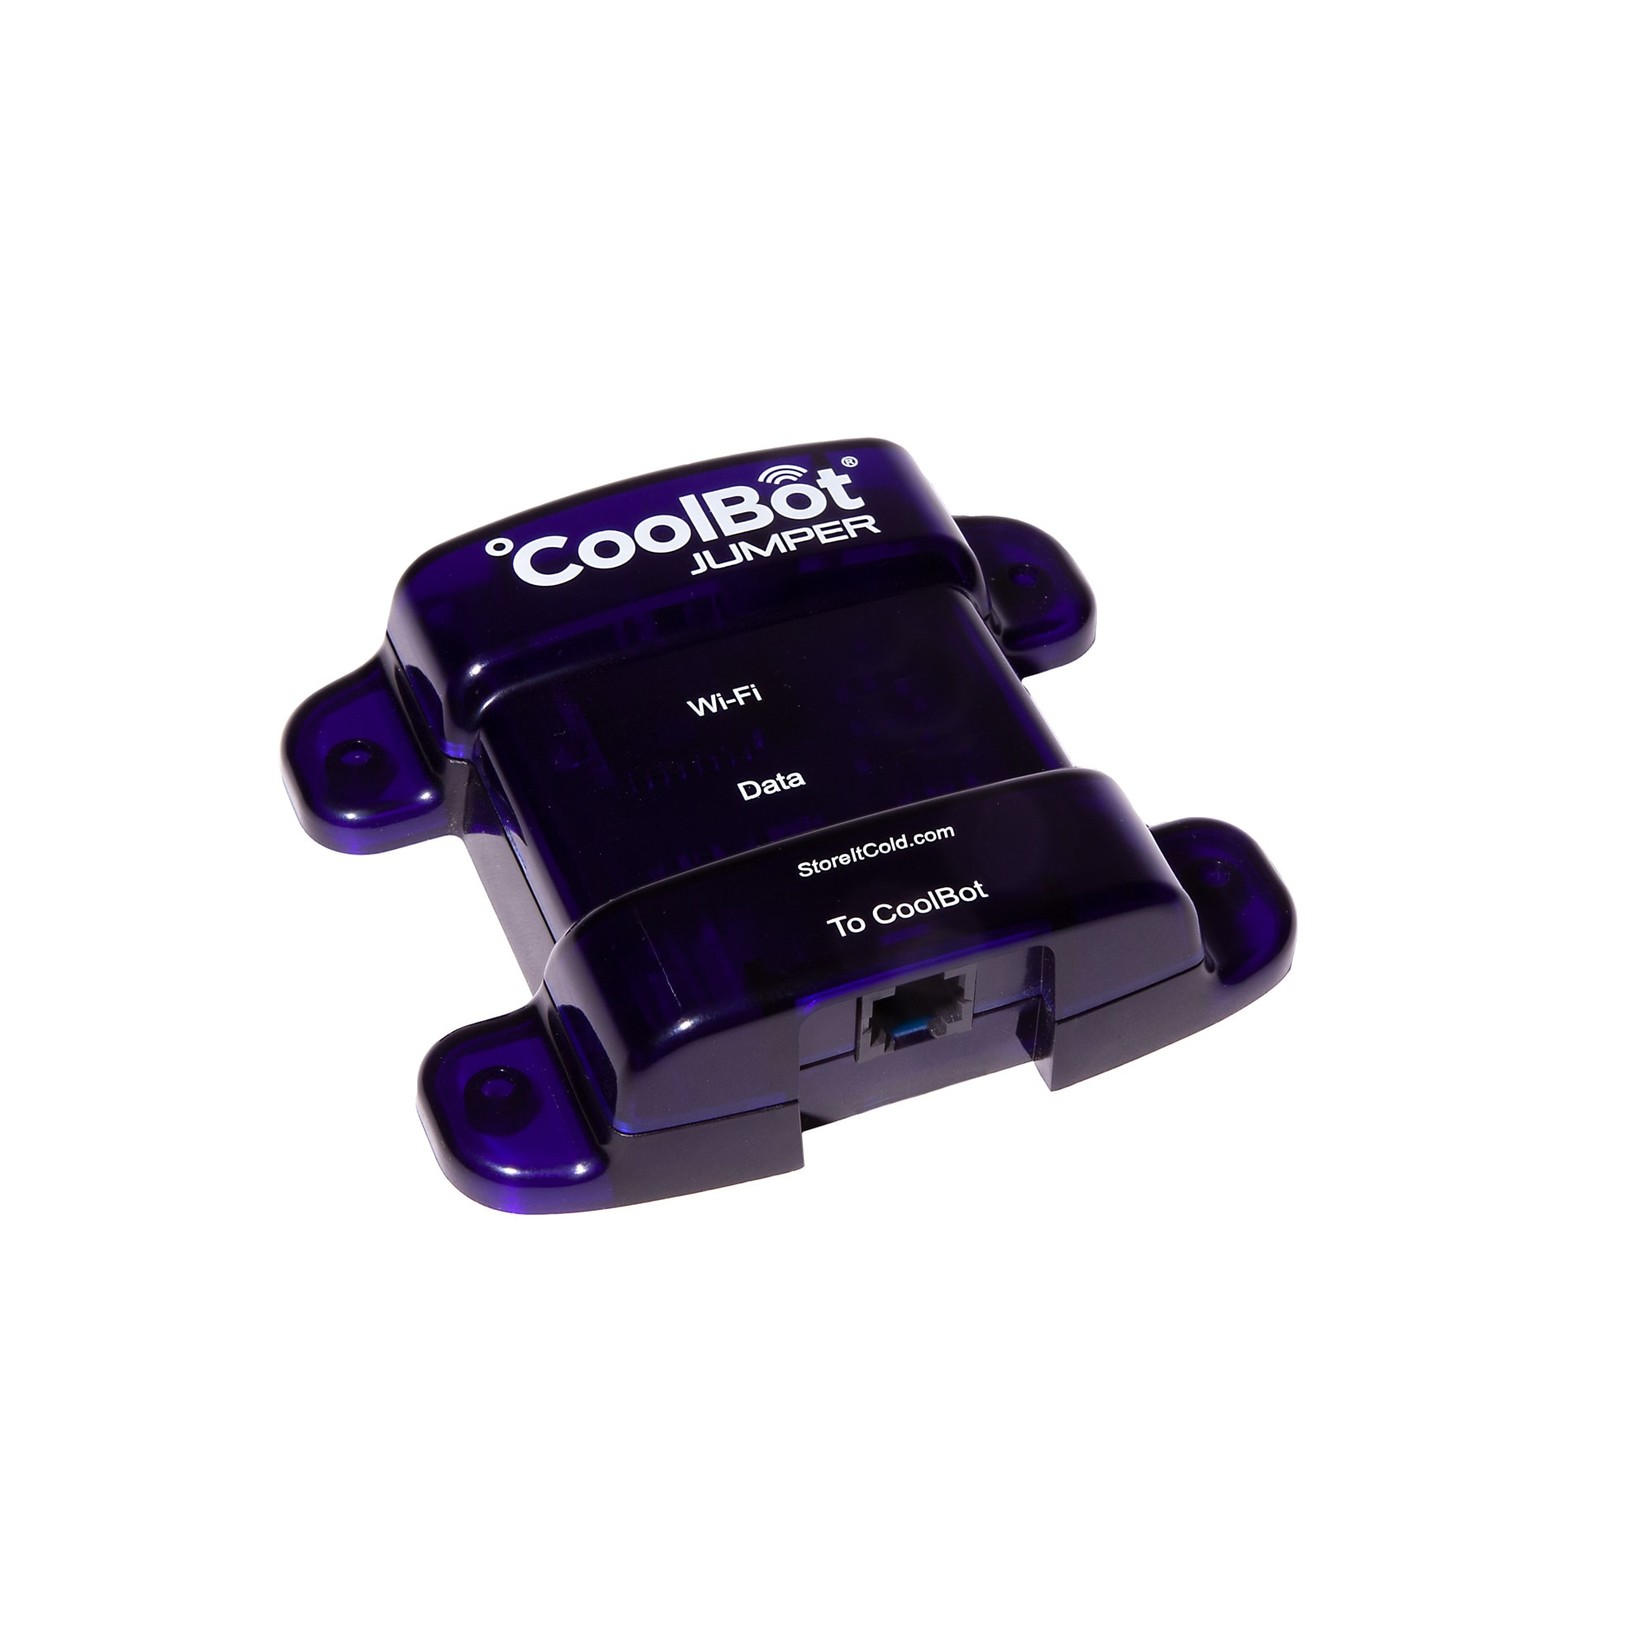 CoolBot Coolbot Pro Pour Chambre Froide Avec Wifi